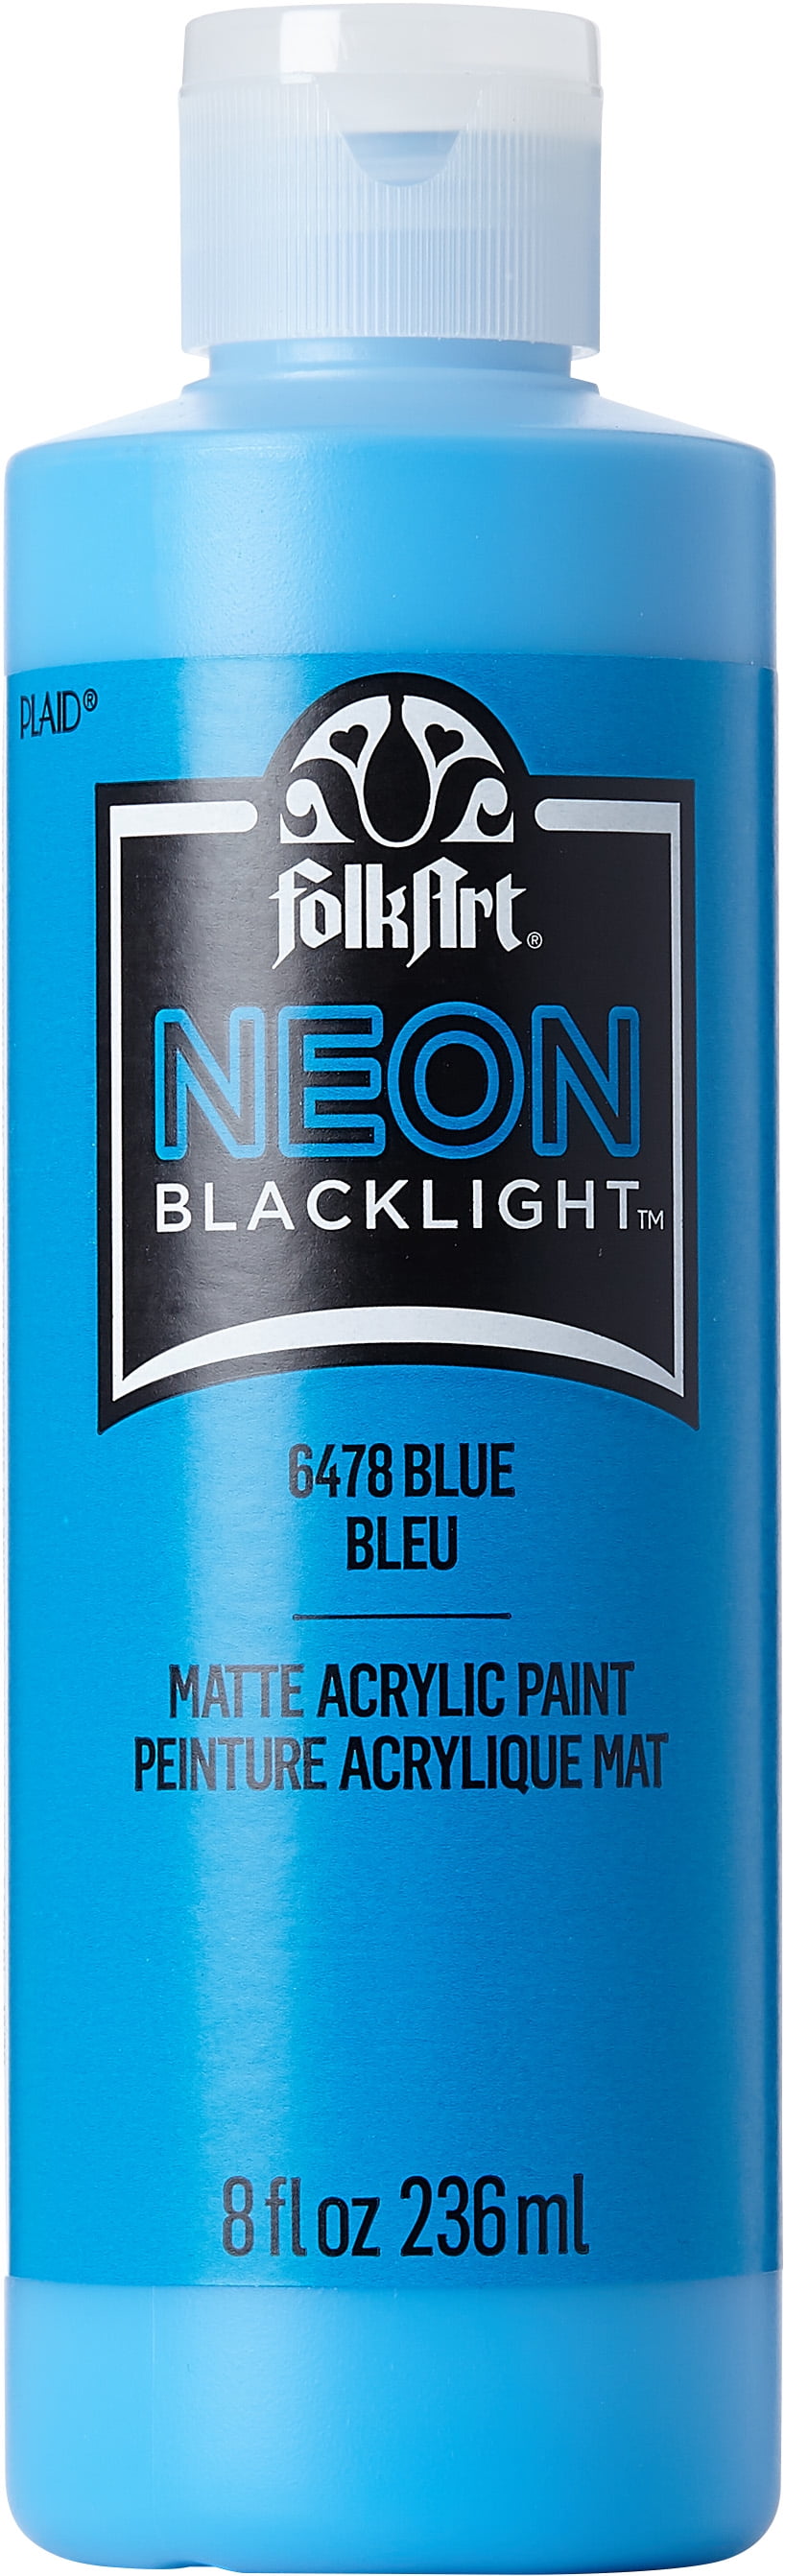 UV Blacklight Dye / Paint - Glowing Fluorescent Liquid